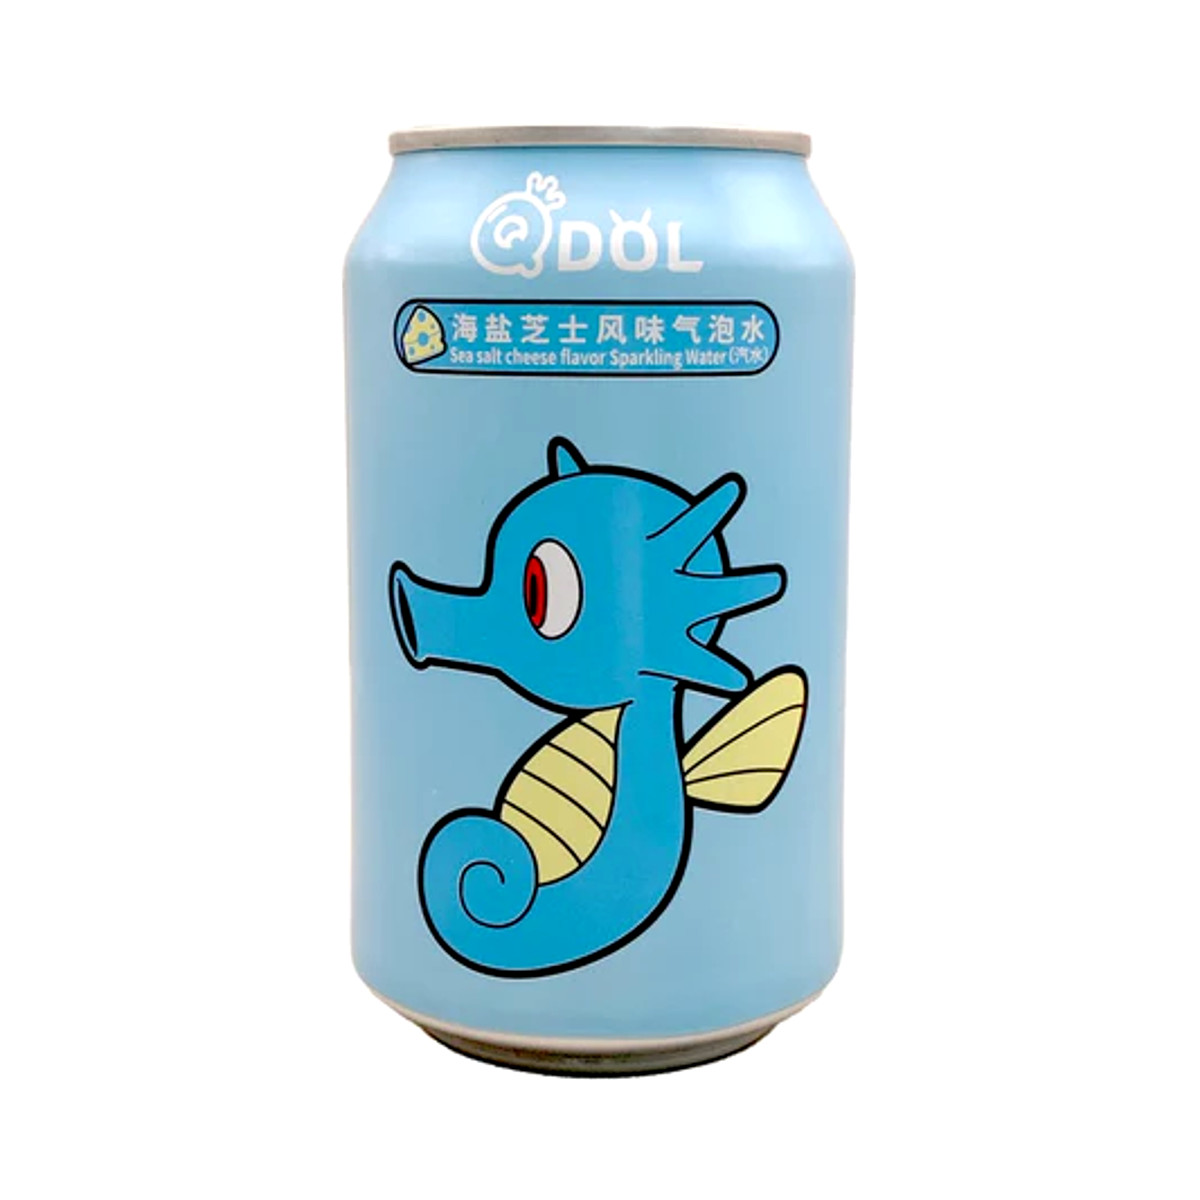 Conjunto de Água Fresca, Pokémon